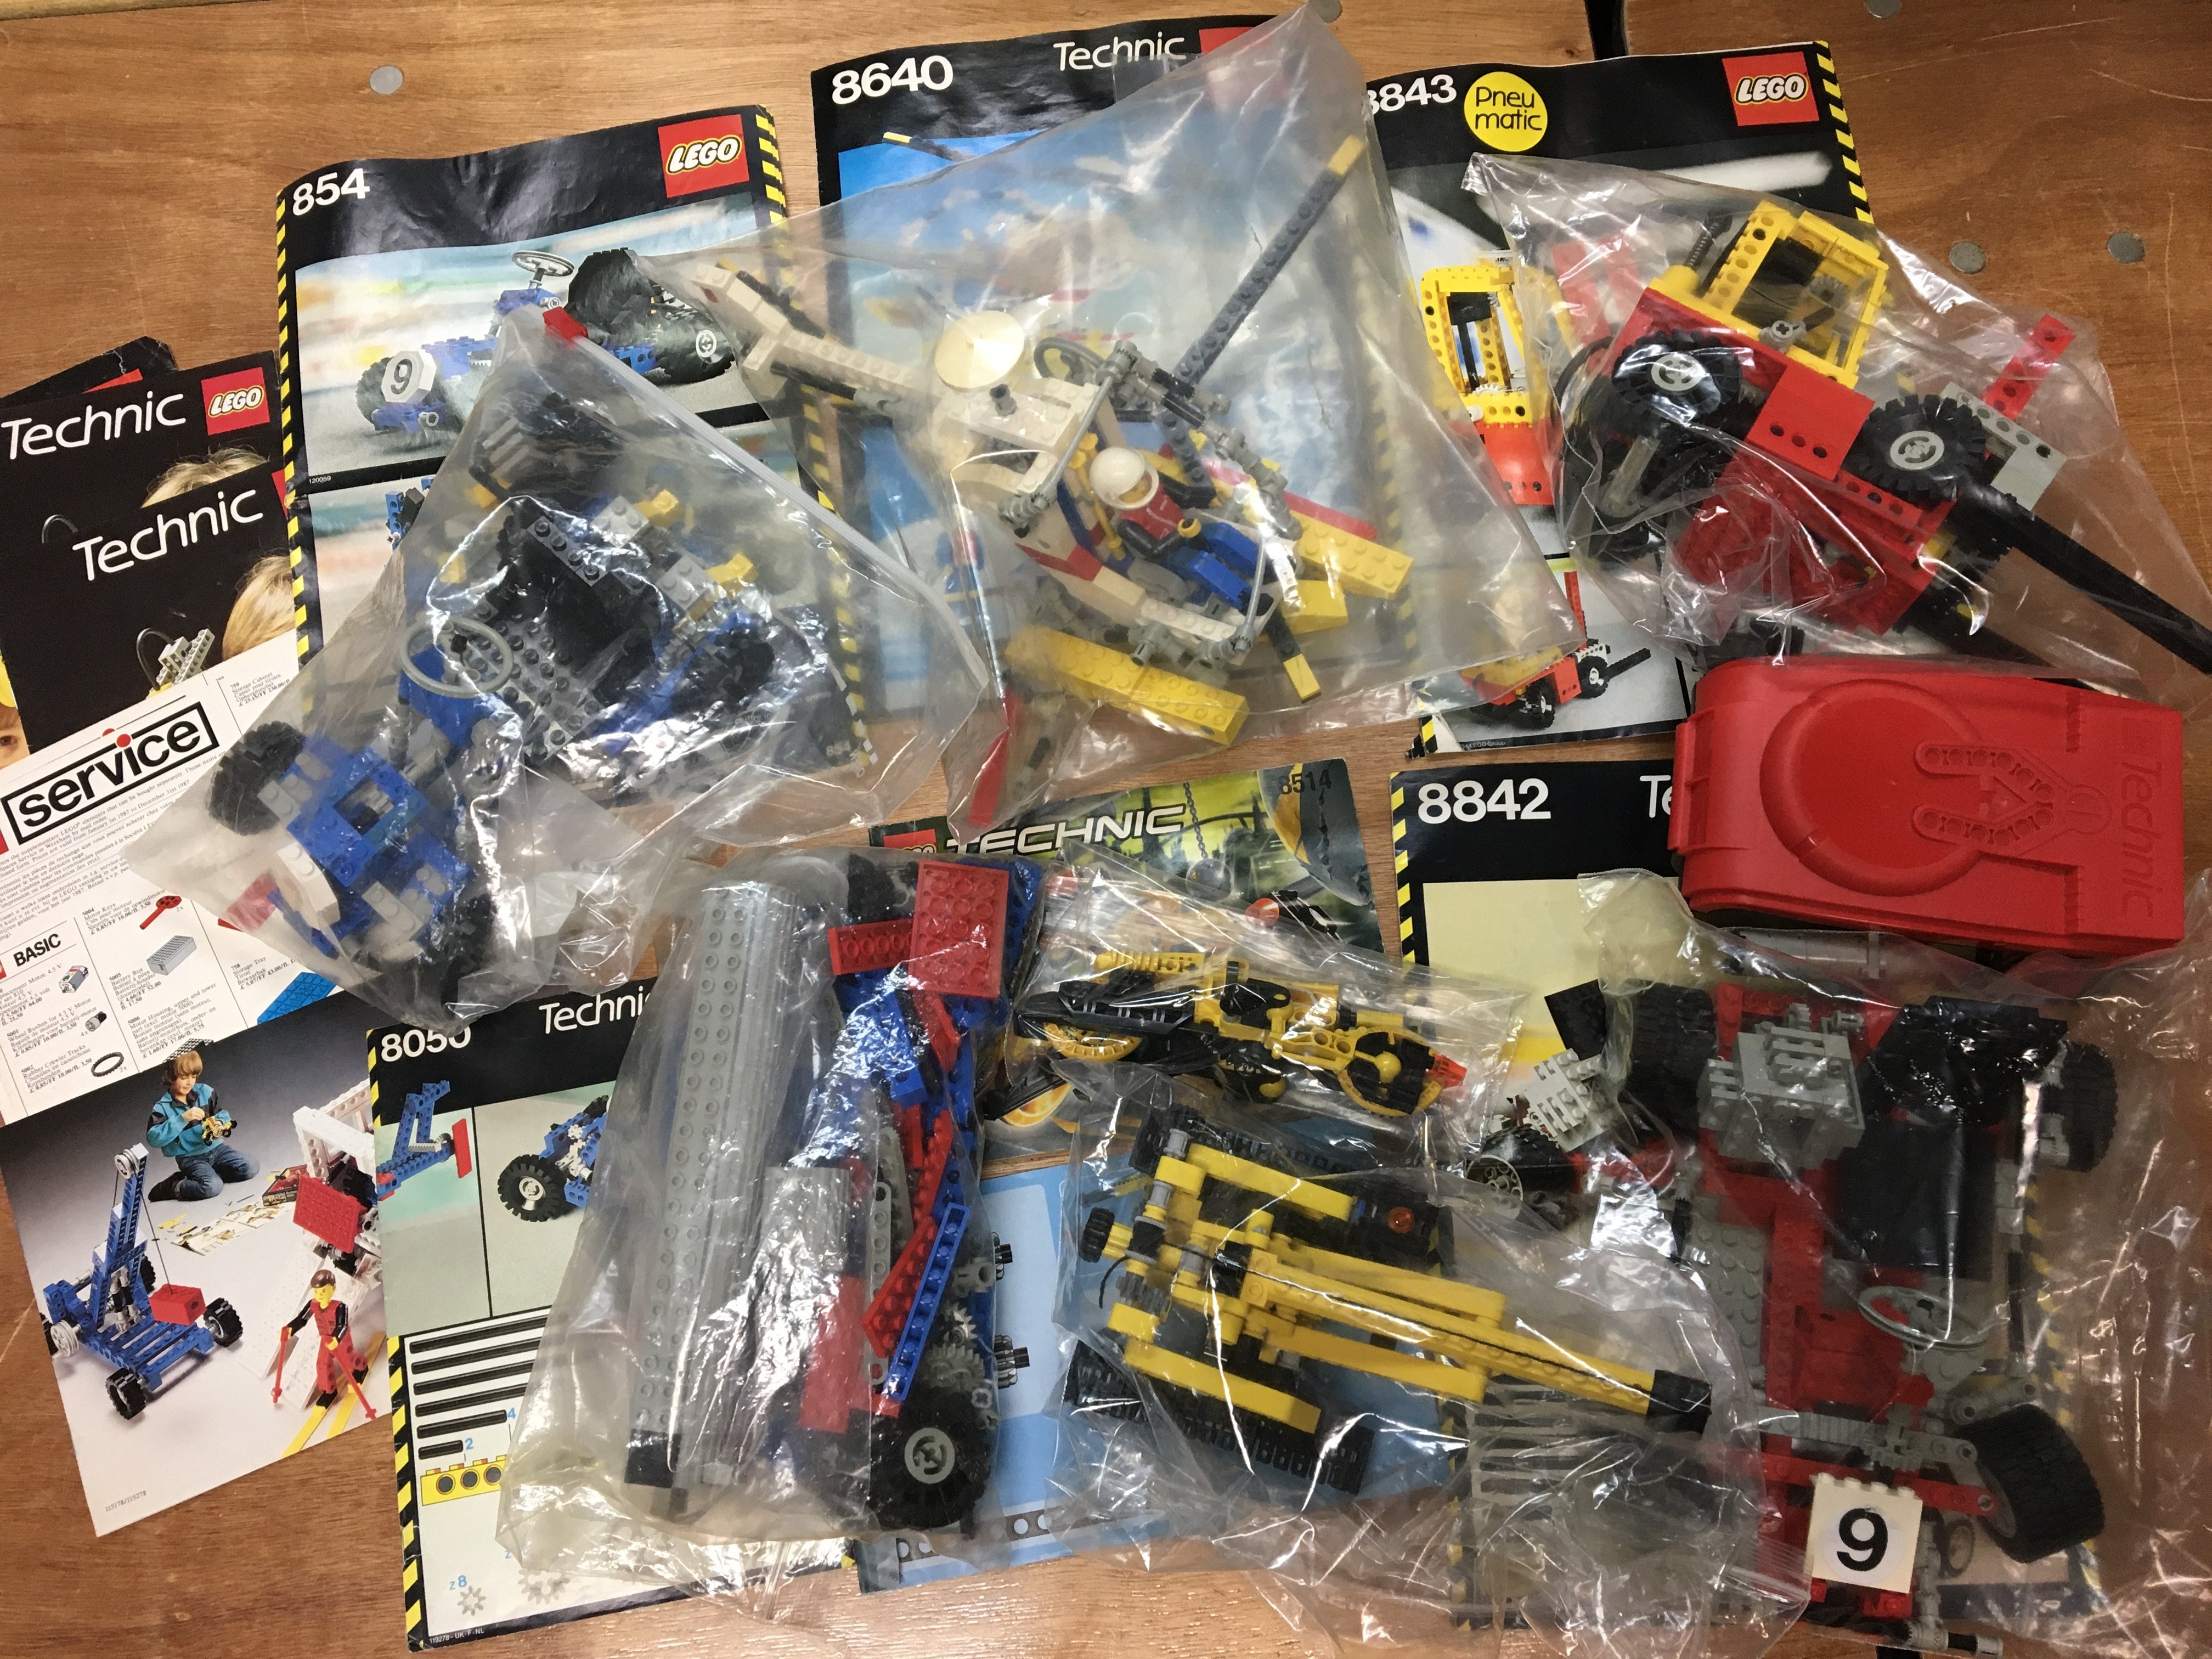 Six boxes of Lego and Mega Bloks consisting of Tec